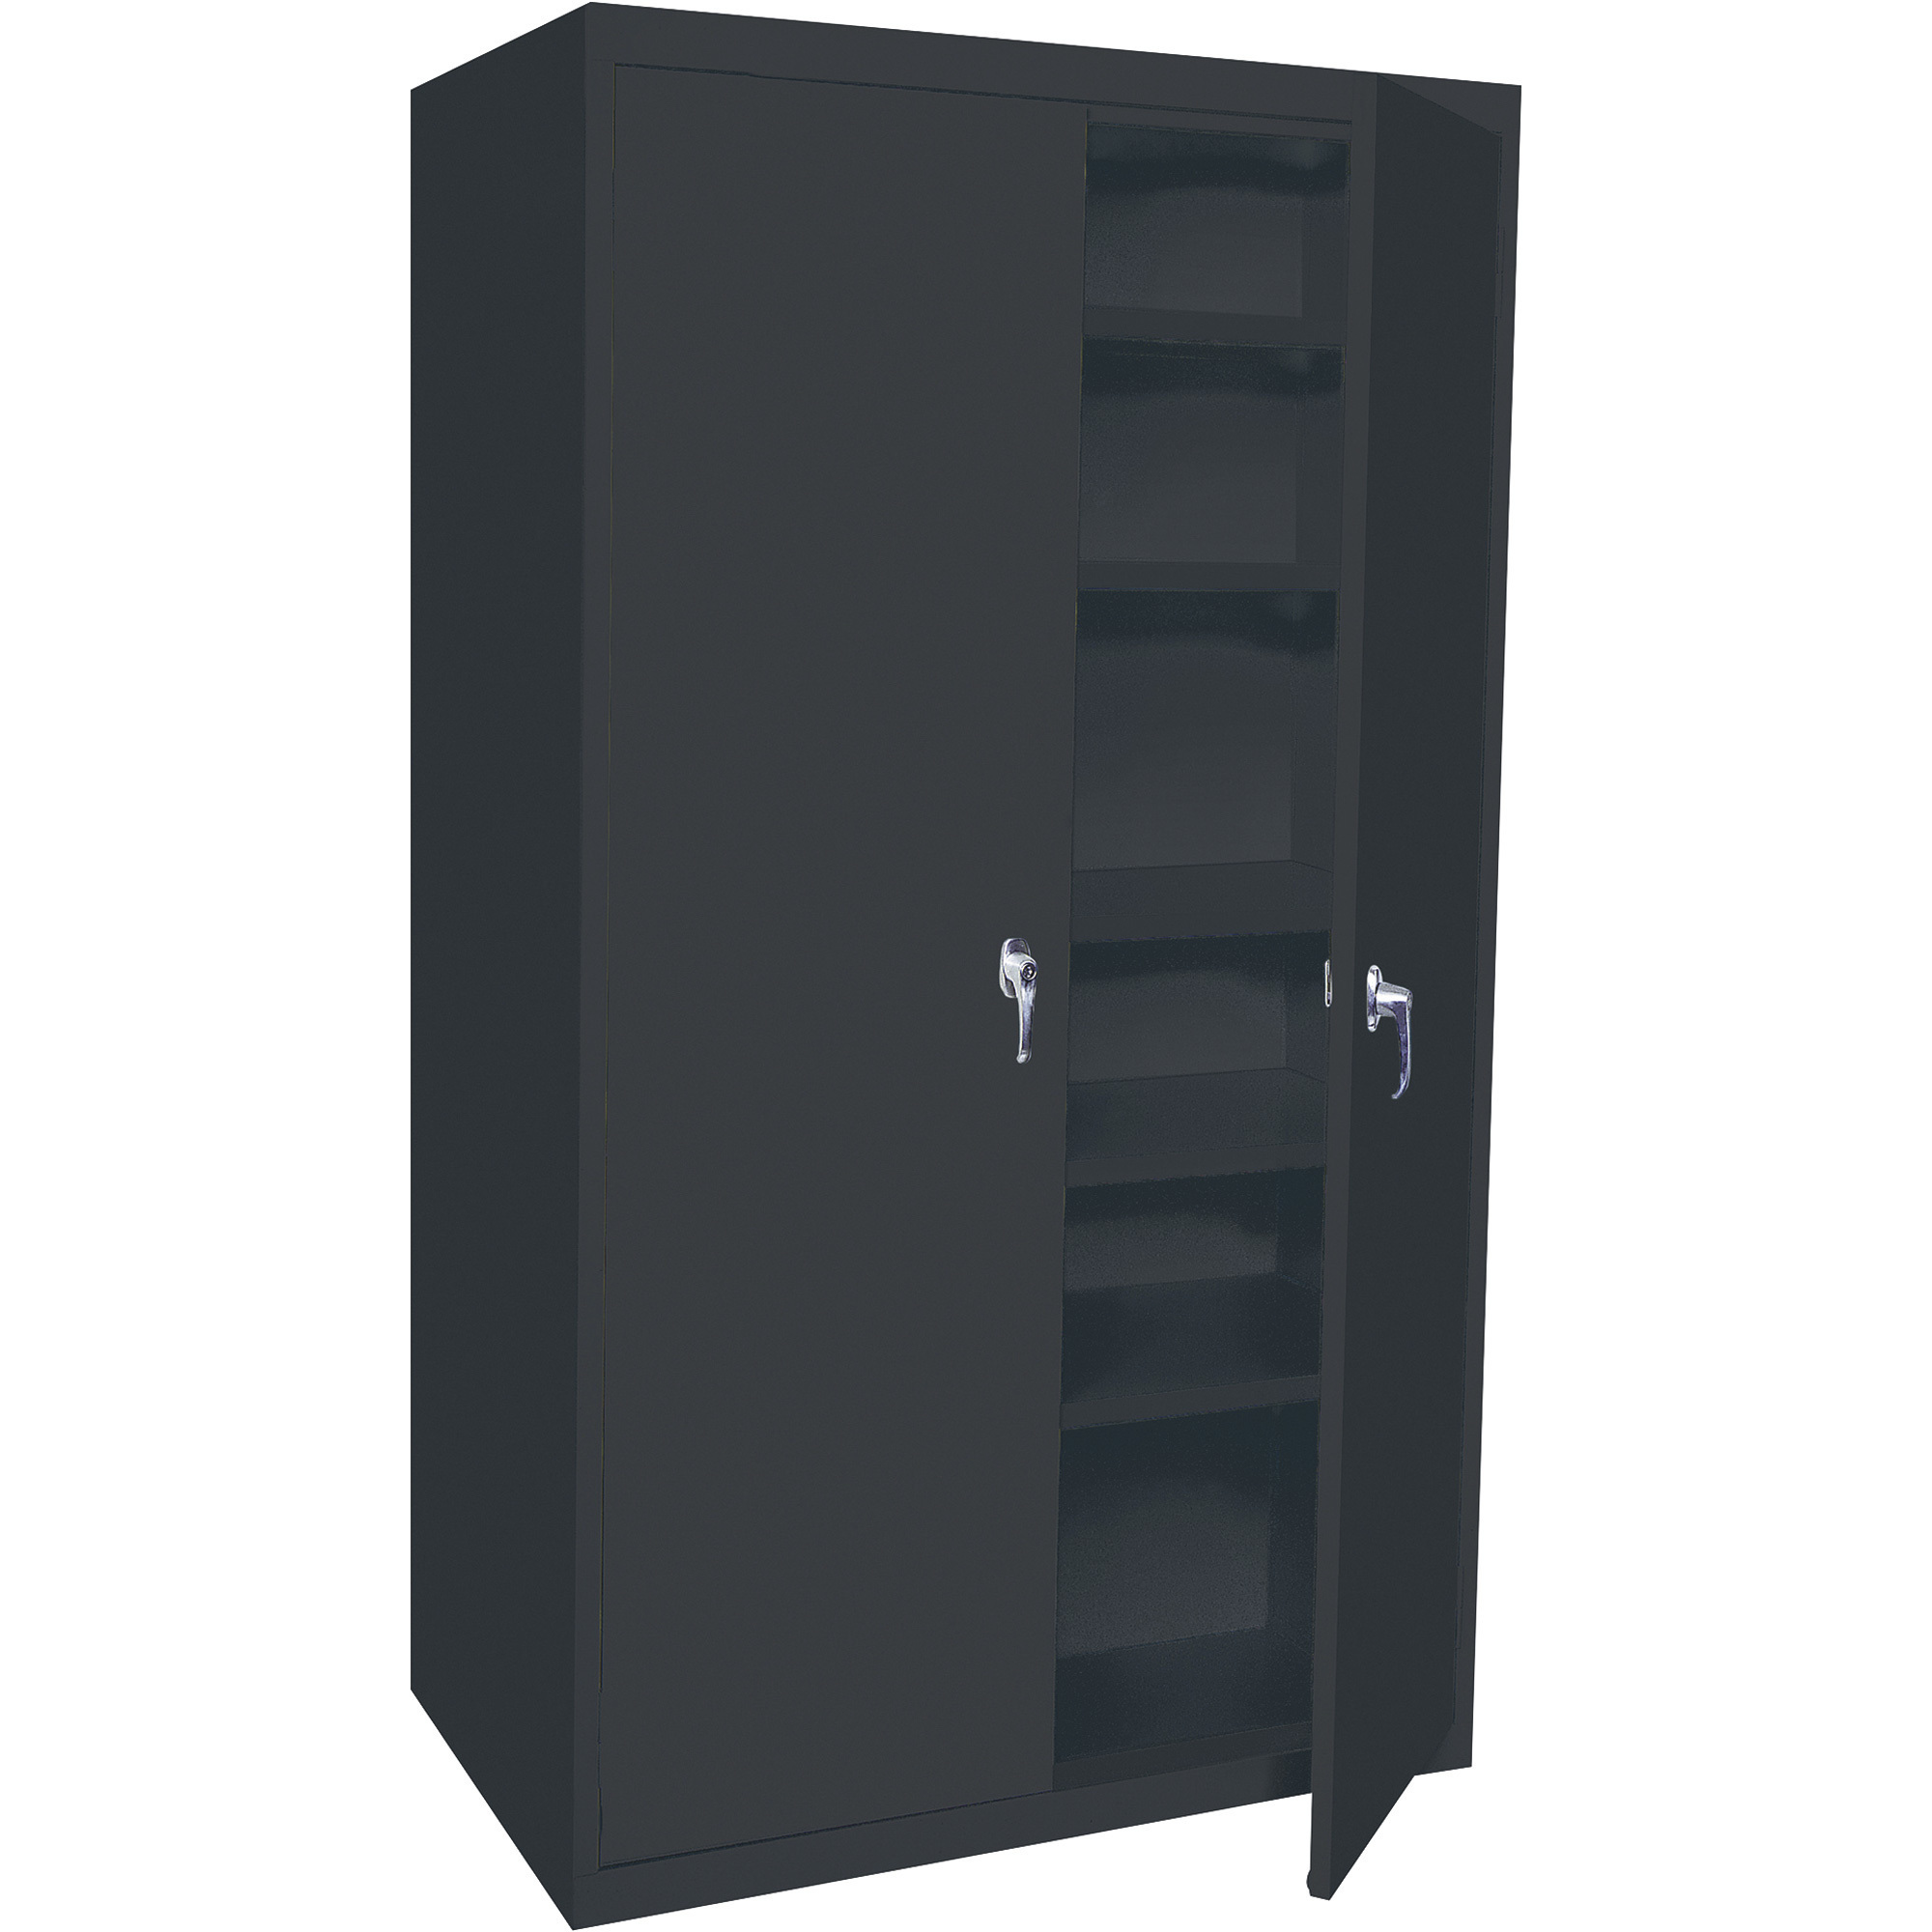 Storage Cabinet — Black, 3 Adjustable Shelves/2 Fixed Shelves, 36Inch W x 18Inch D x 78Inch H, Model - Steel Cabinets USA 5-7818-AF-B